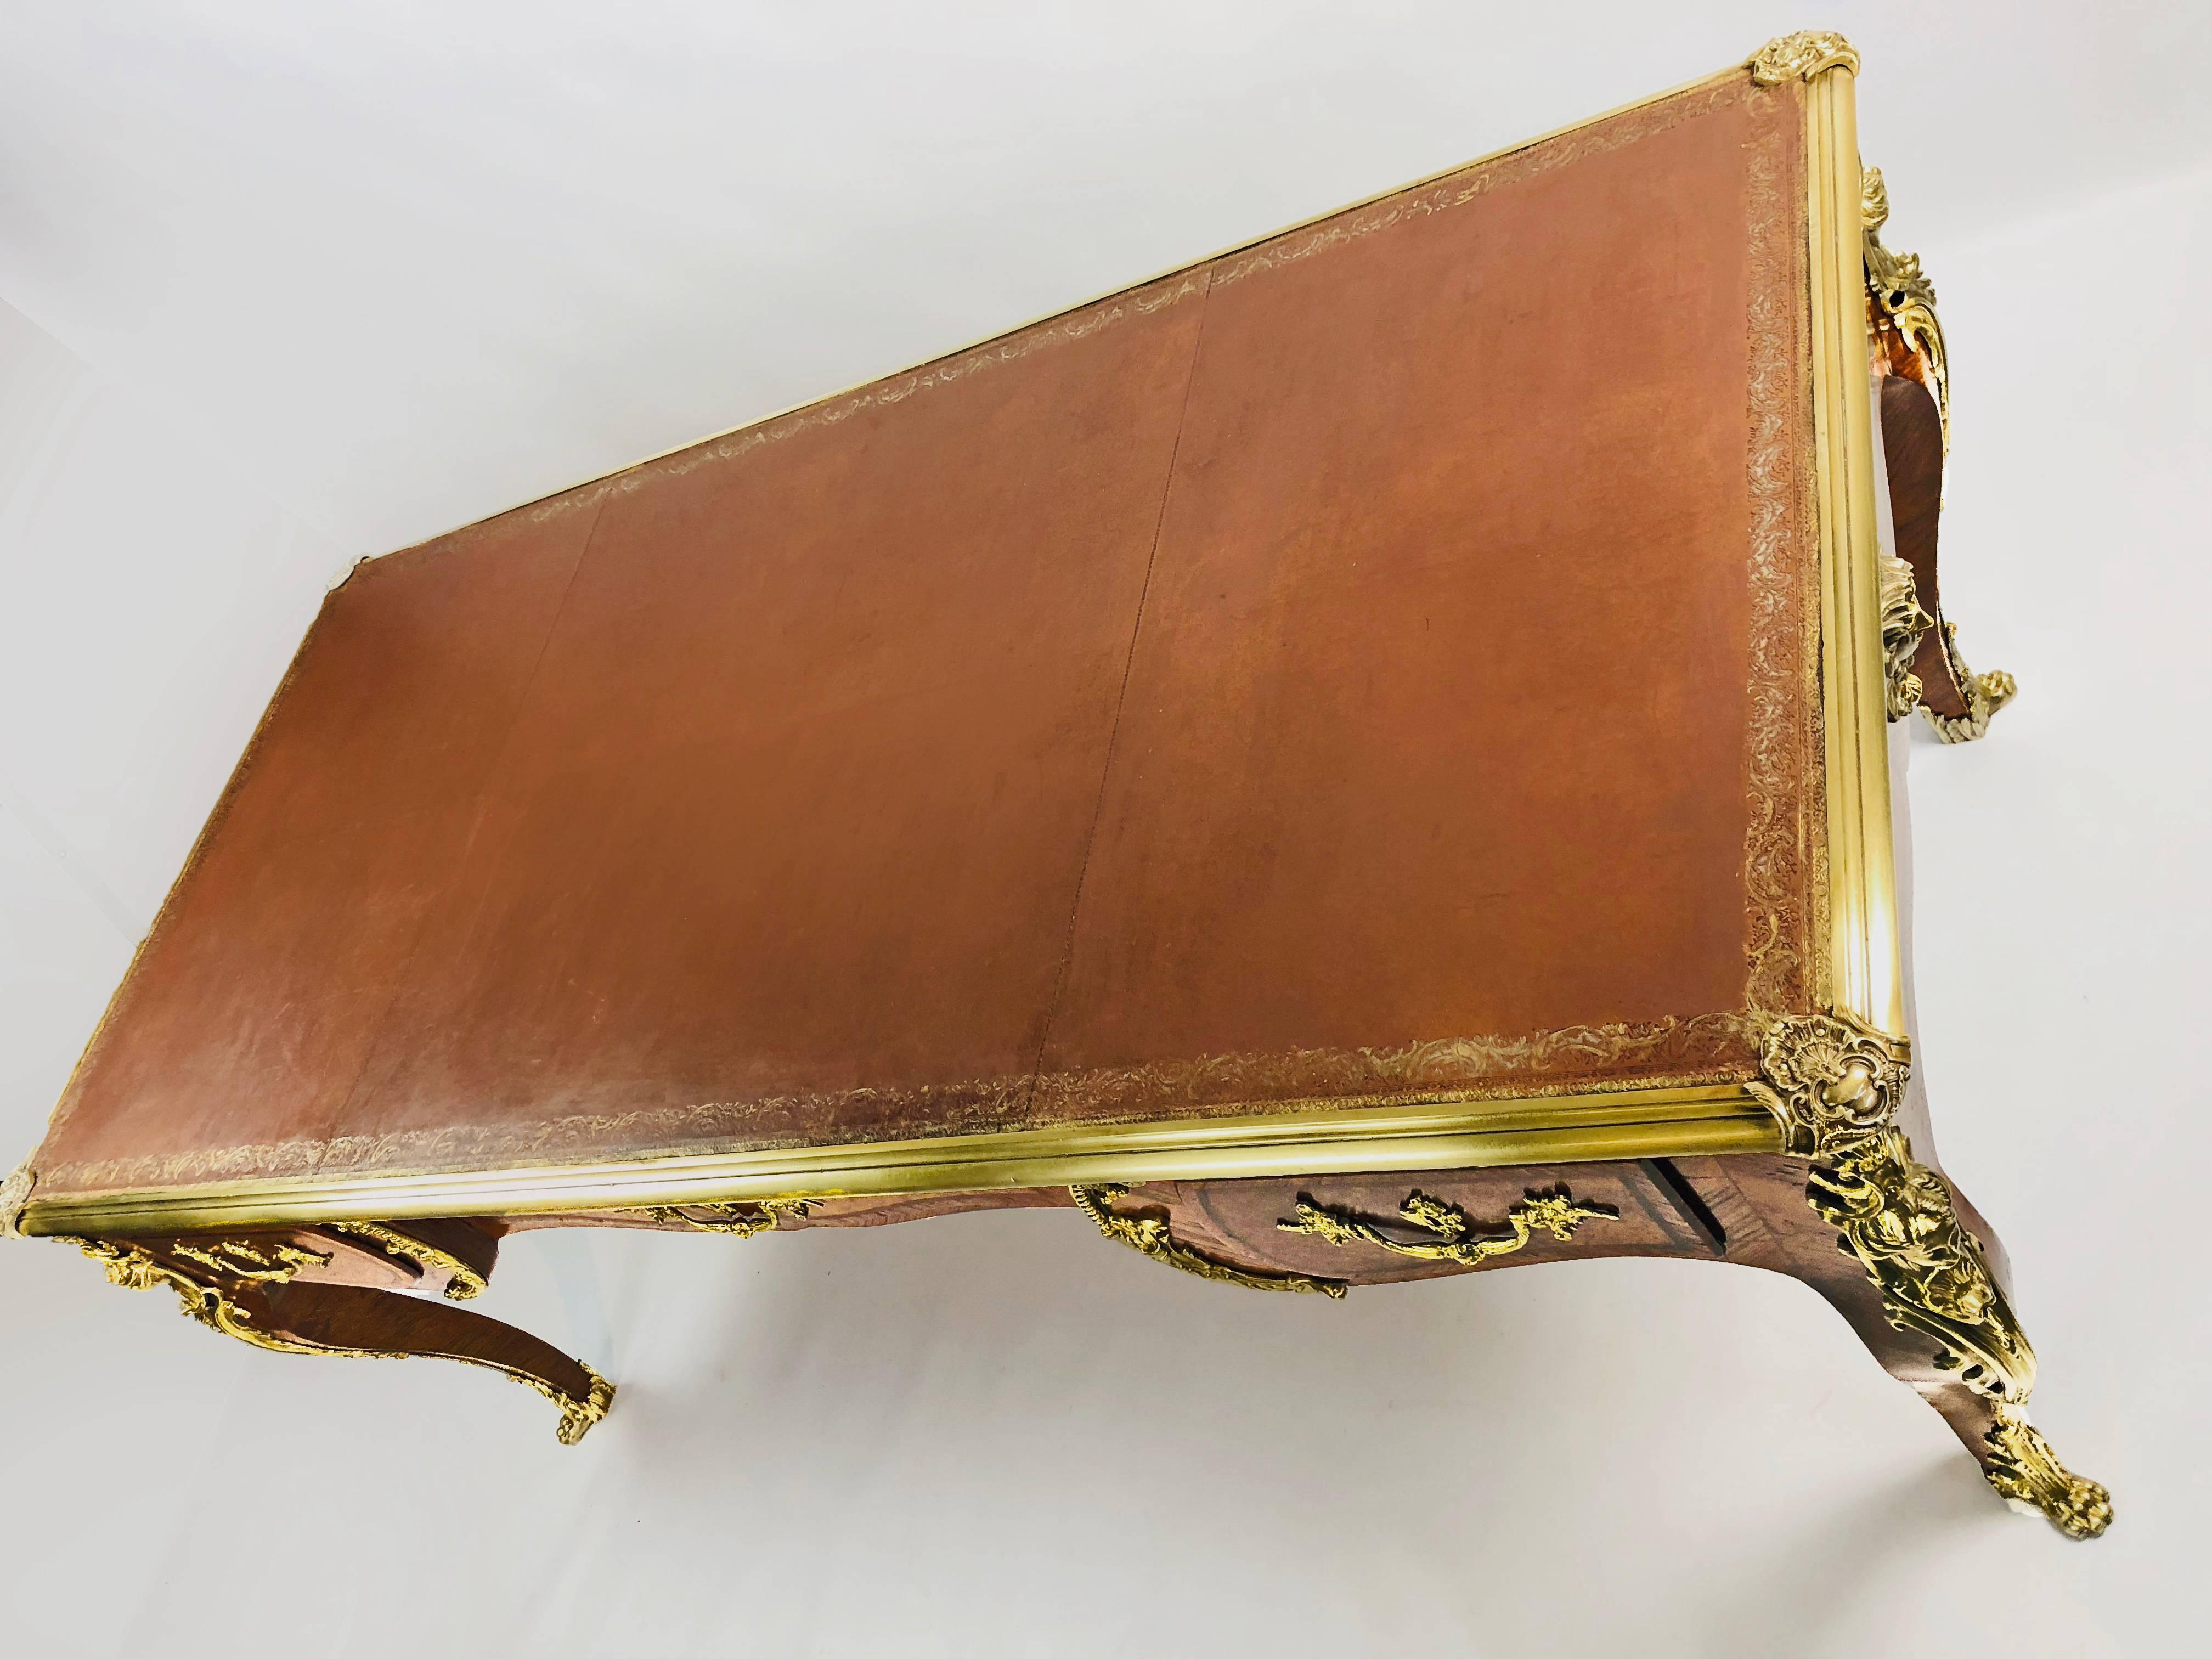 Marquetry Desk Bureau Plat 19th Century in the Louis XV Manner